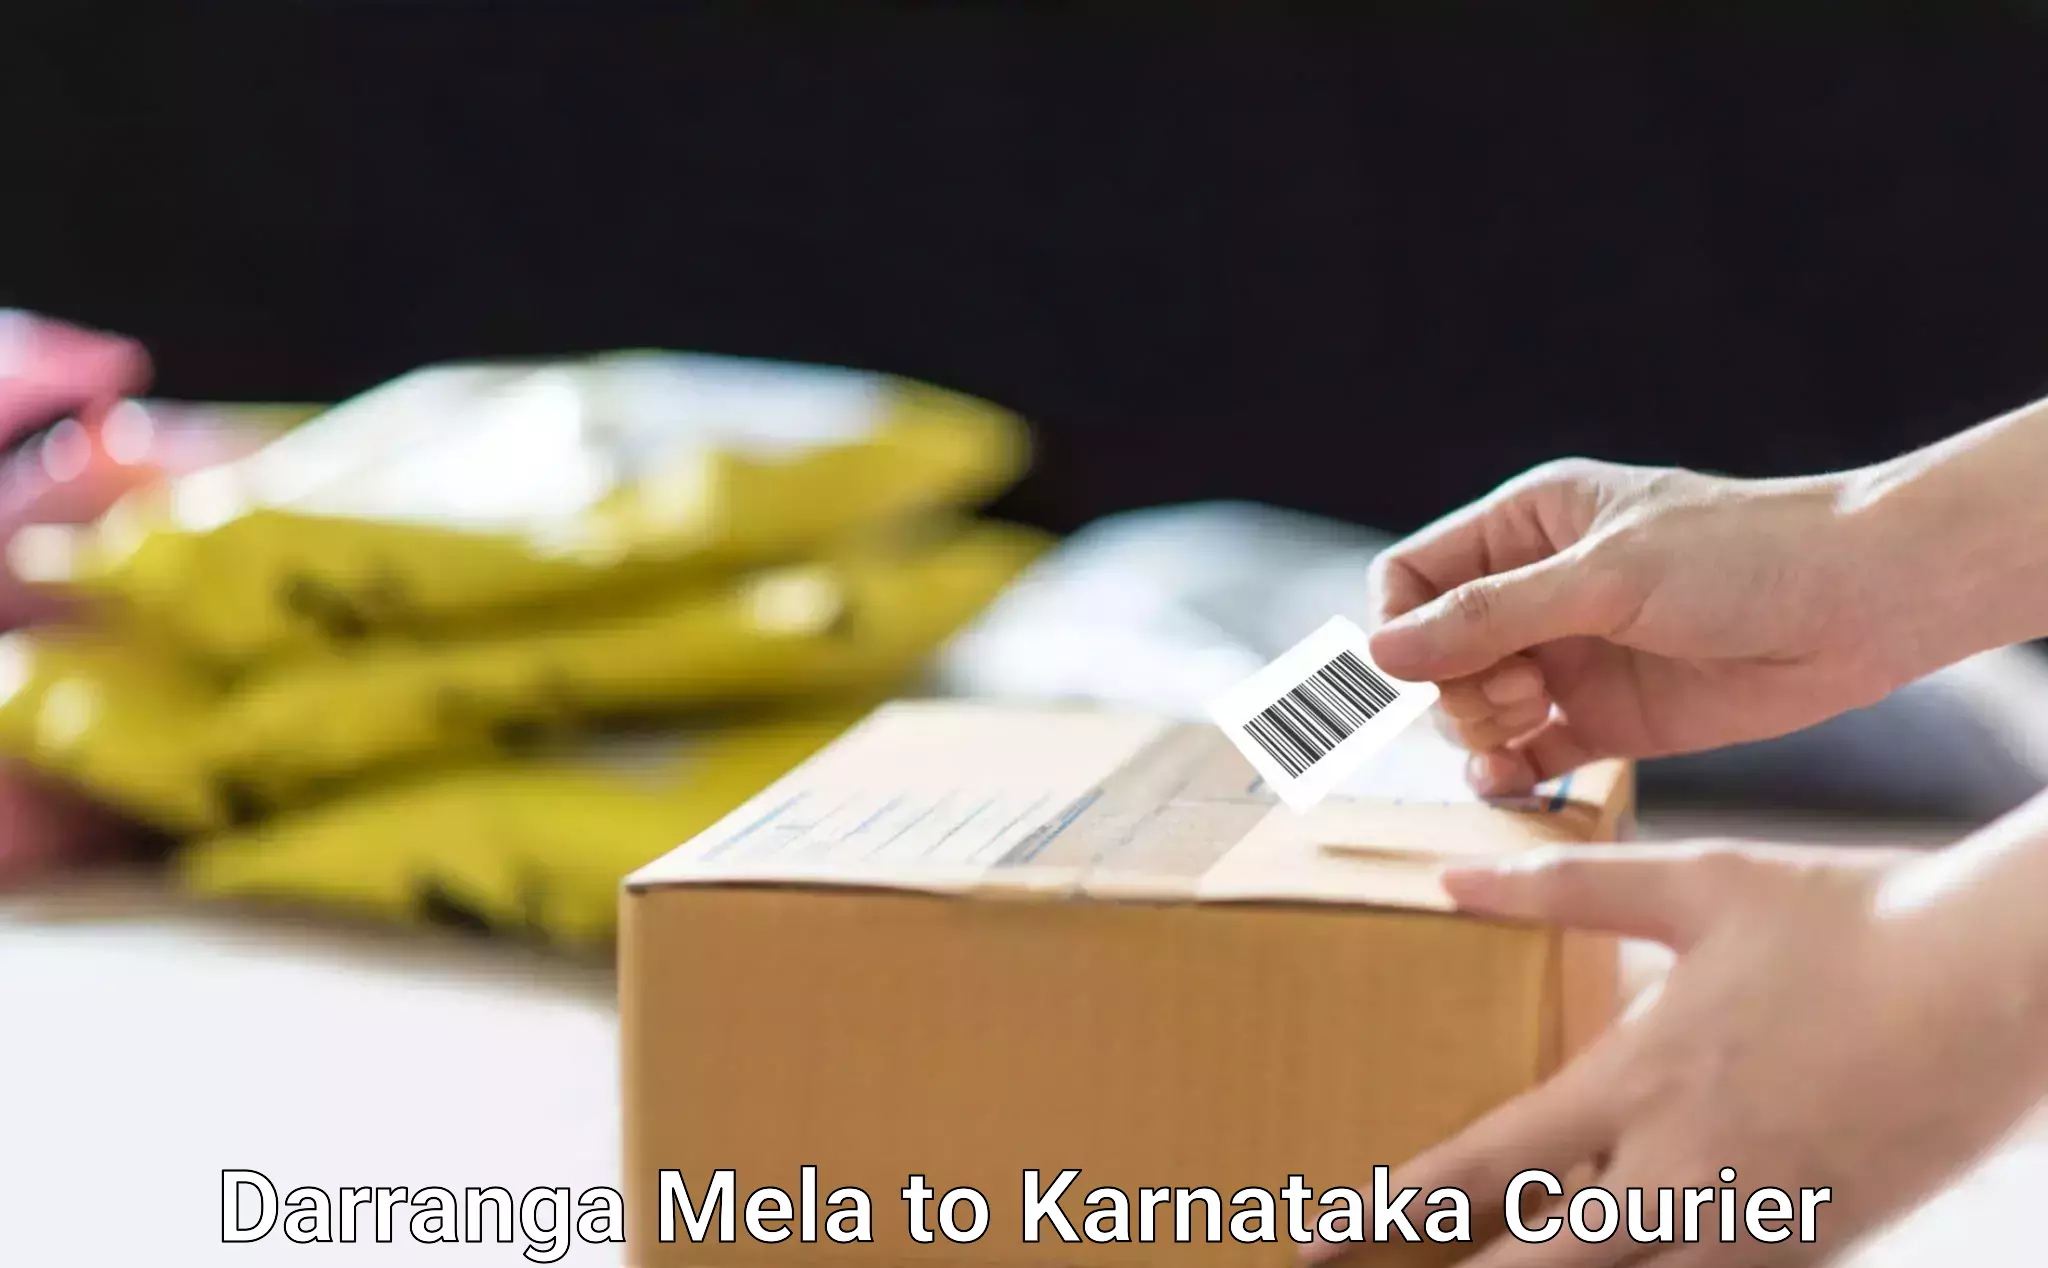 Professional courier services Darranga Mela to Karnataka